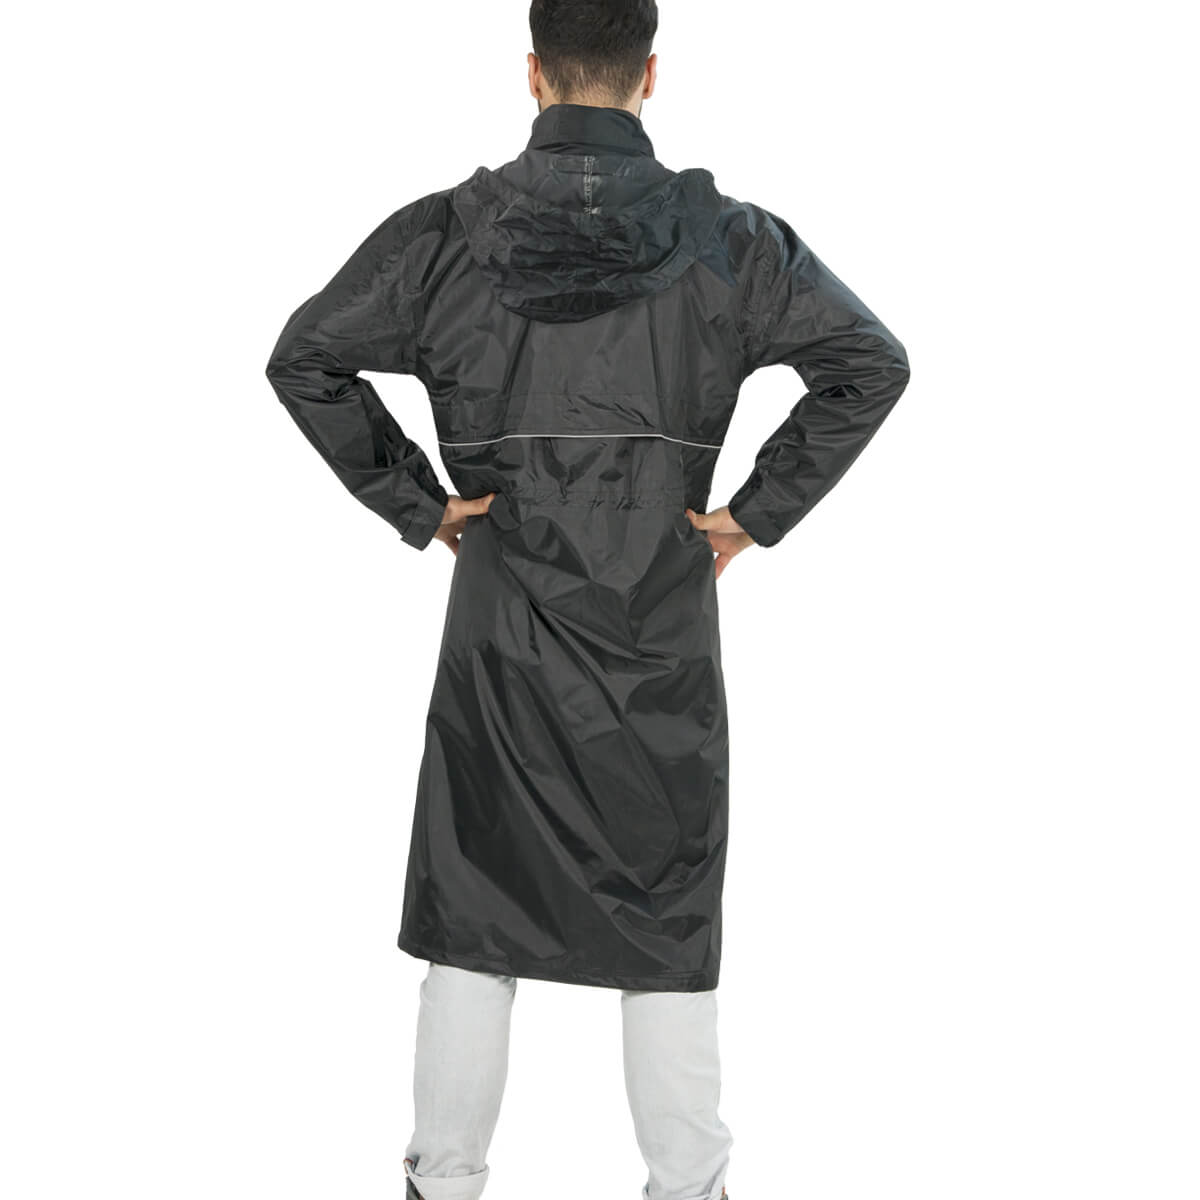 TJMarvin Rainproof Trench Coat With Hood And E05 Black Leg Cover Insert